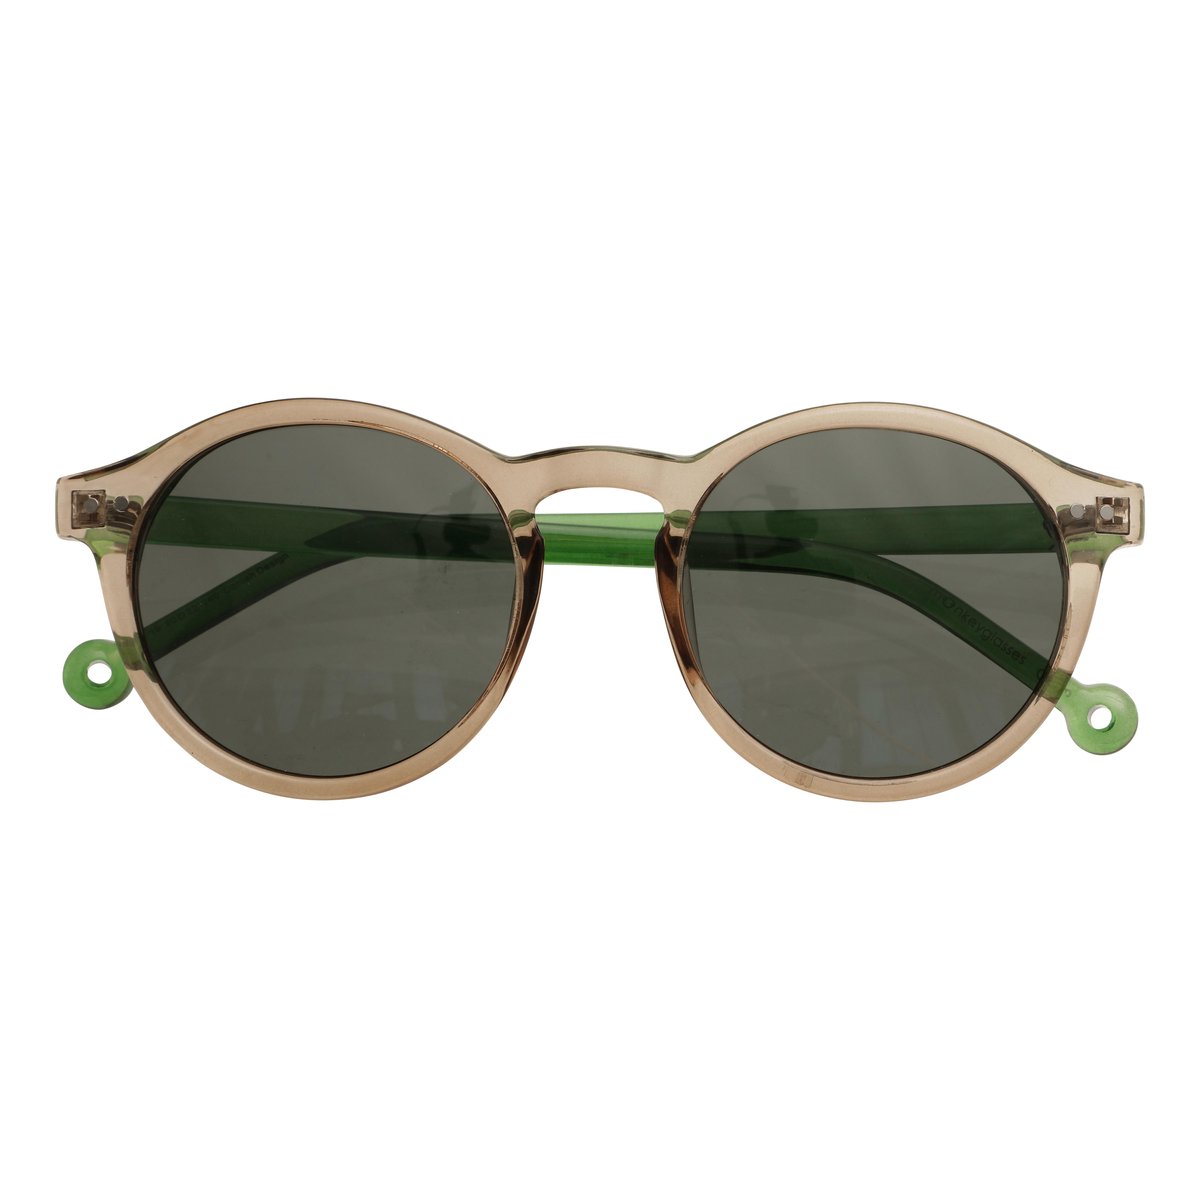 ™Monkeyglasses Bille 19 Smoke / Green transparent Sun - Zonnebril - 100% UV bescherming - Danish Design - 100% Upcycled